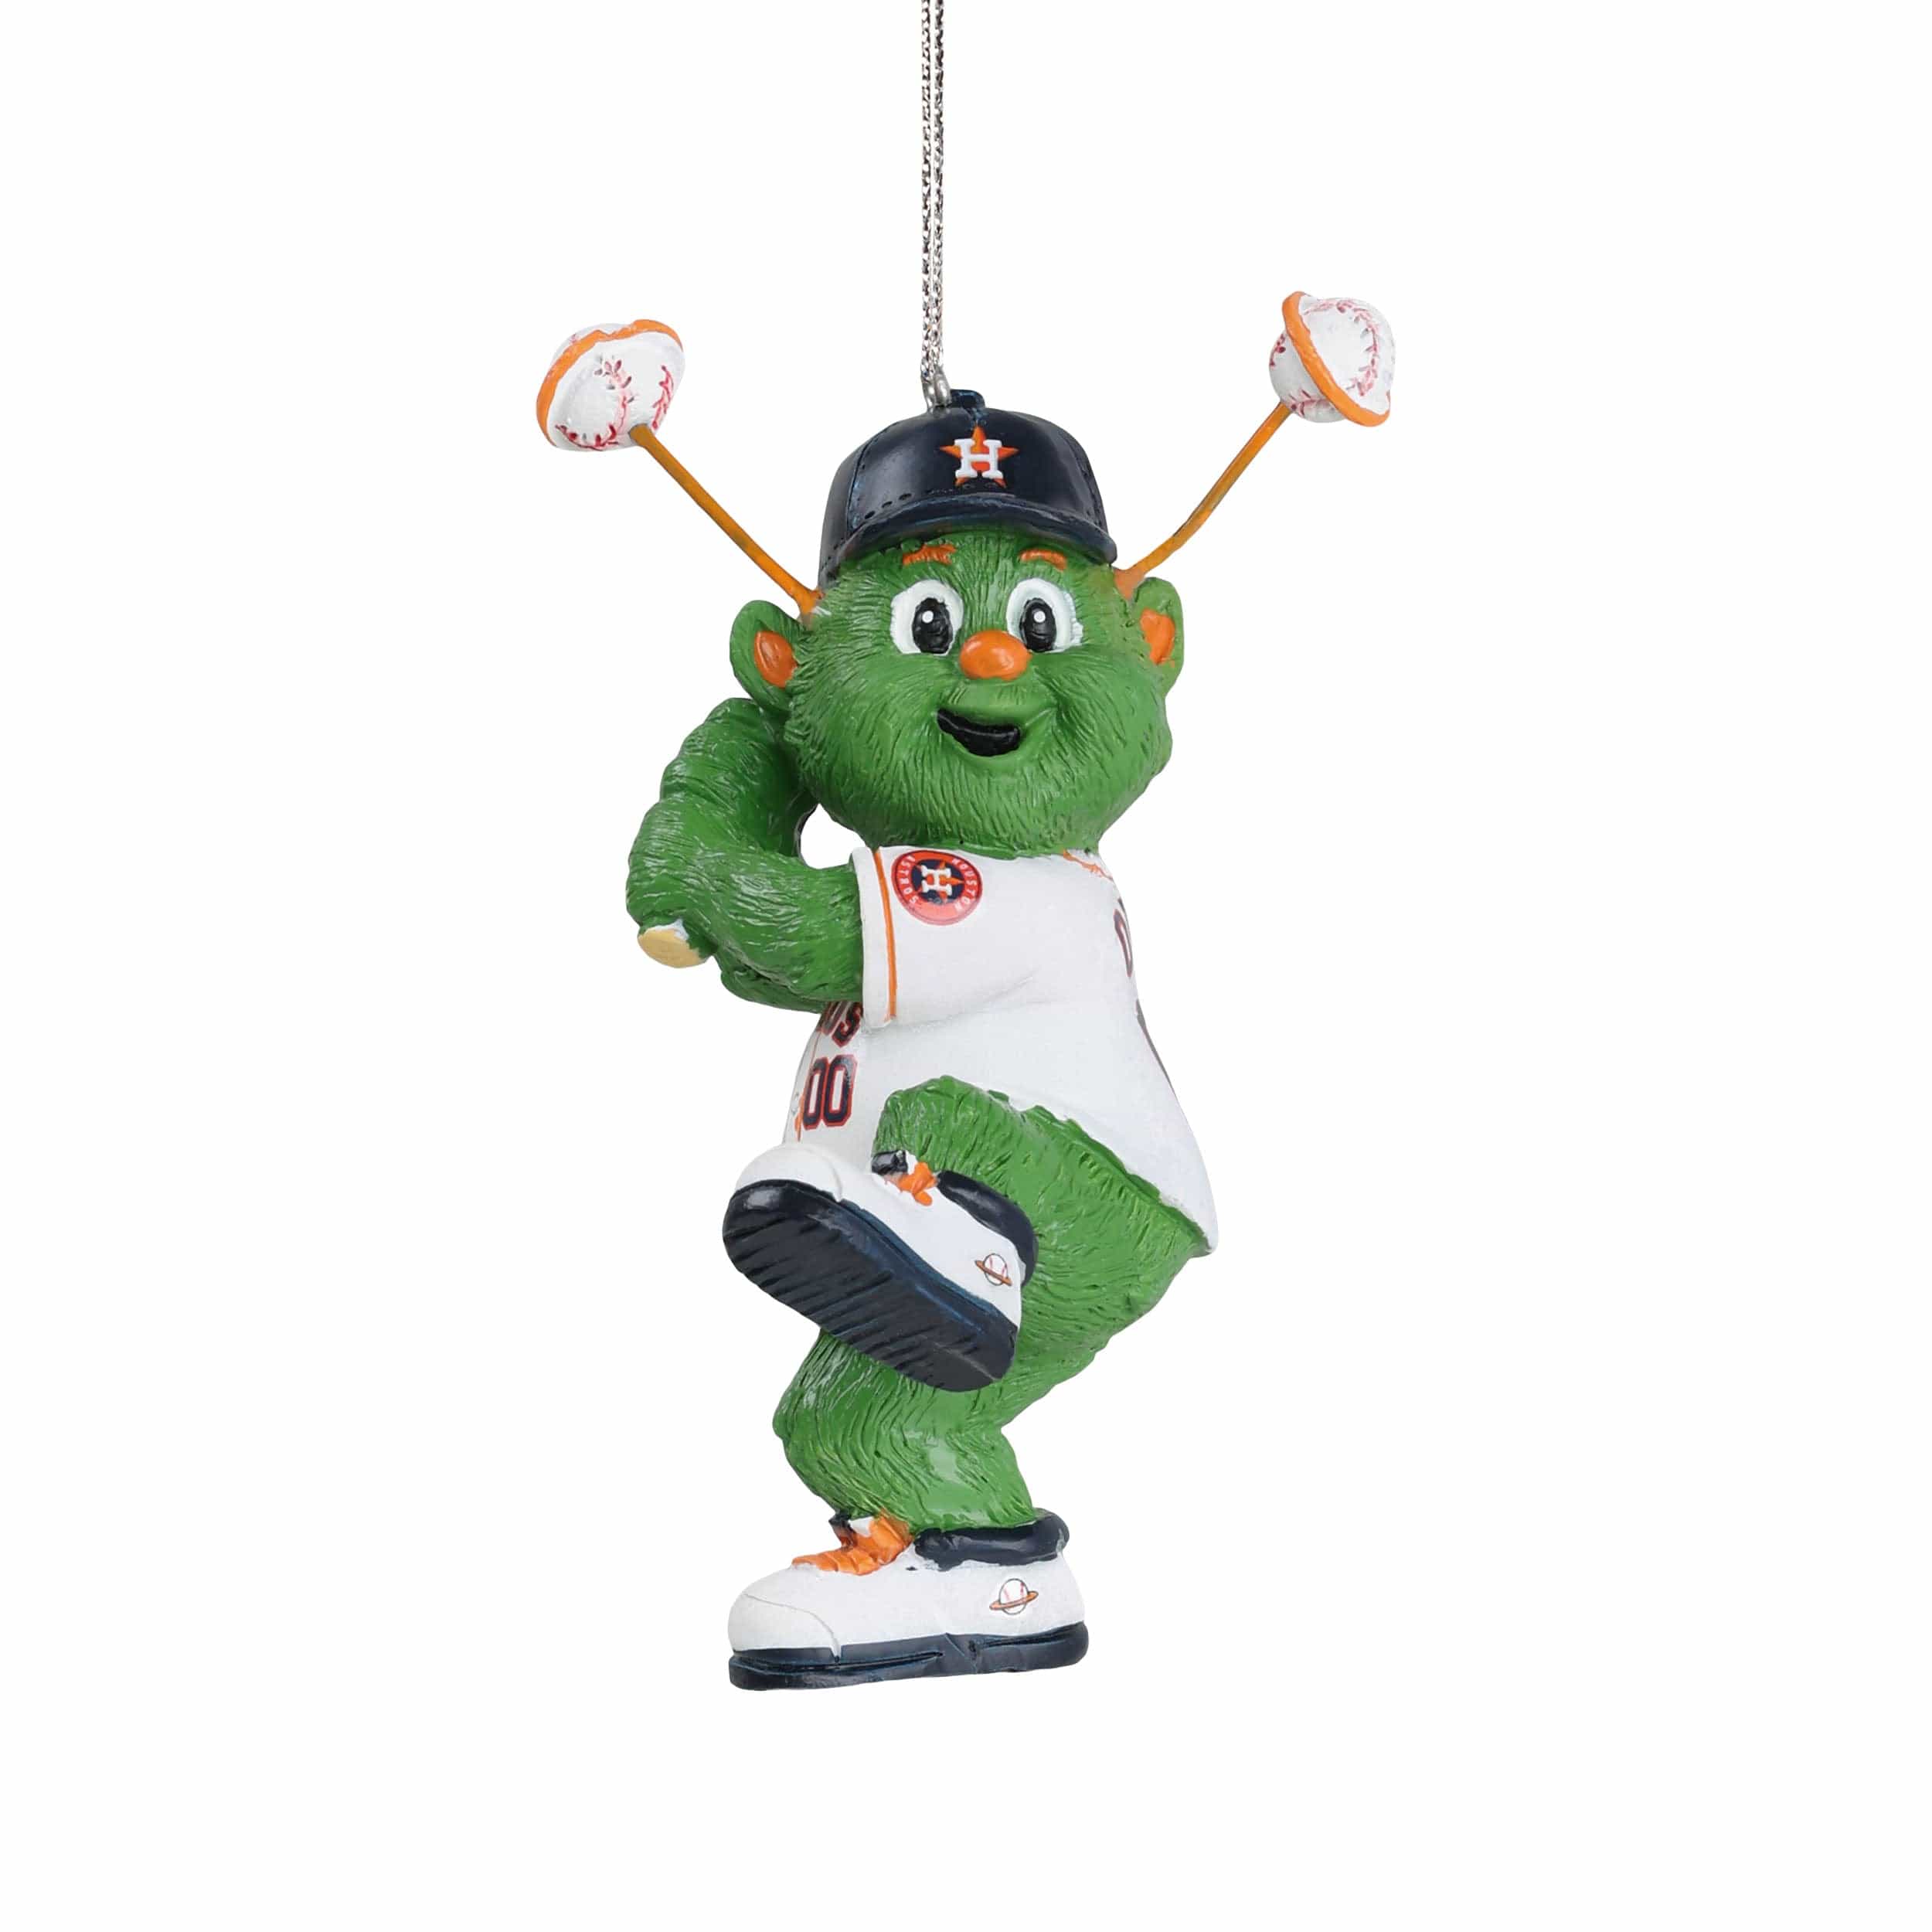  Houston Astros Plush Mascot : Sports Fan Toy Figures : Sports  & Outdoors